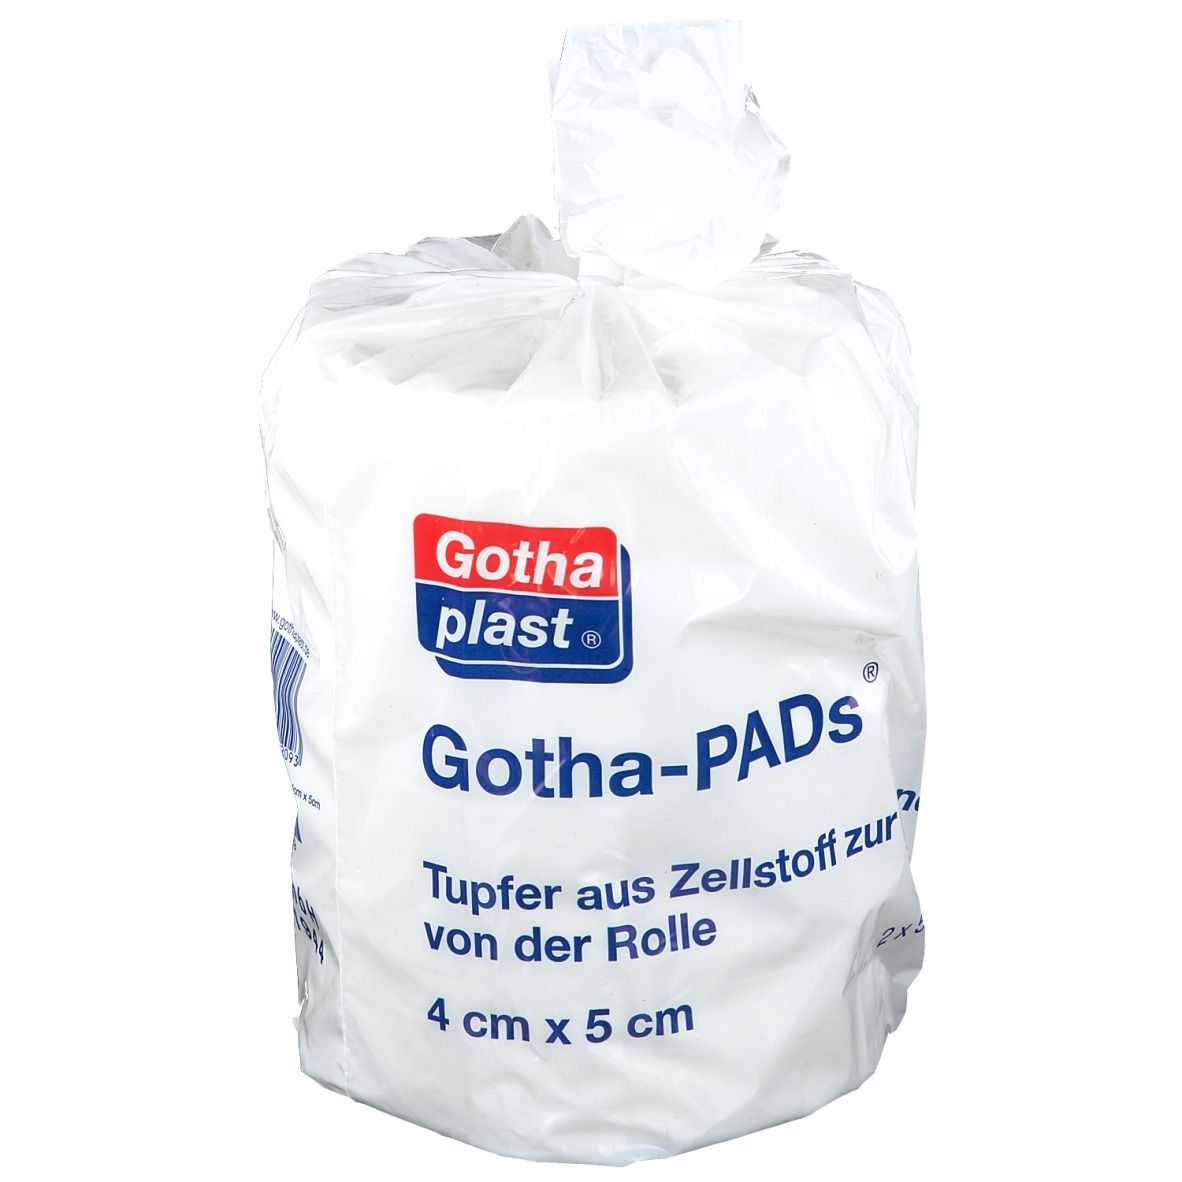 Gothaplast® Gotha-PADS® Zellstofftupfer